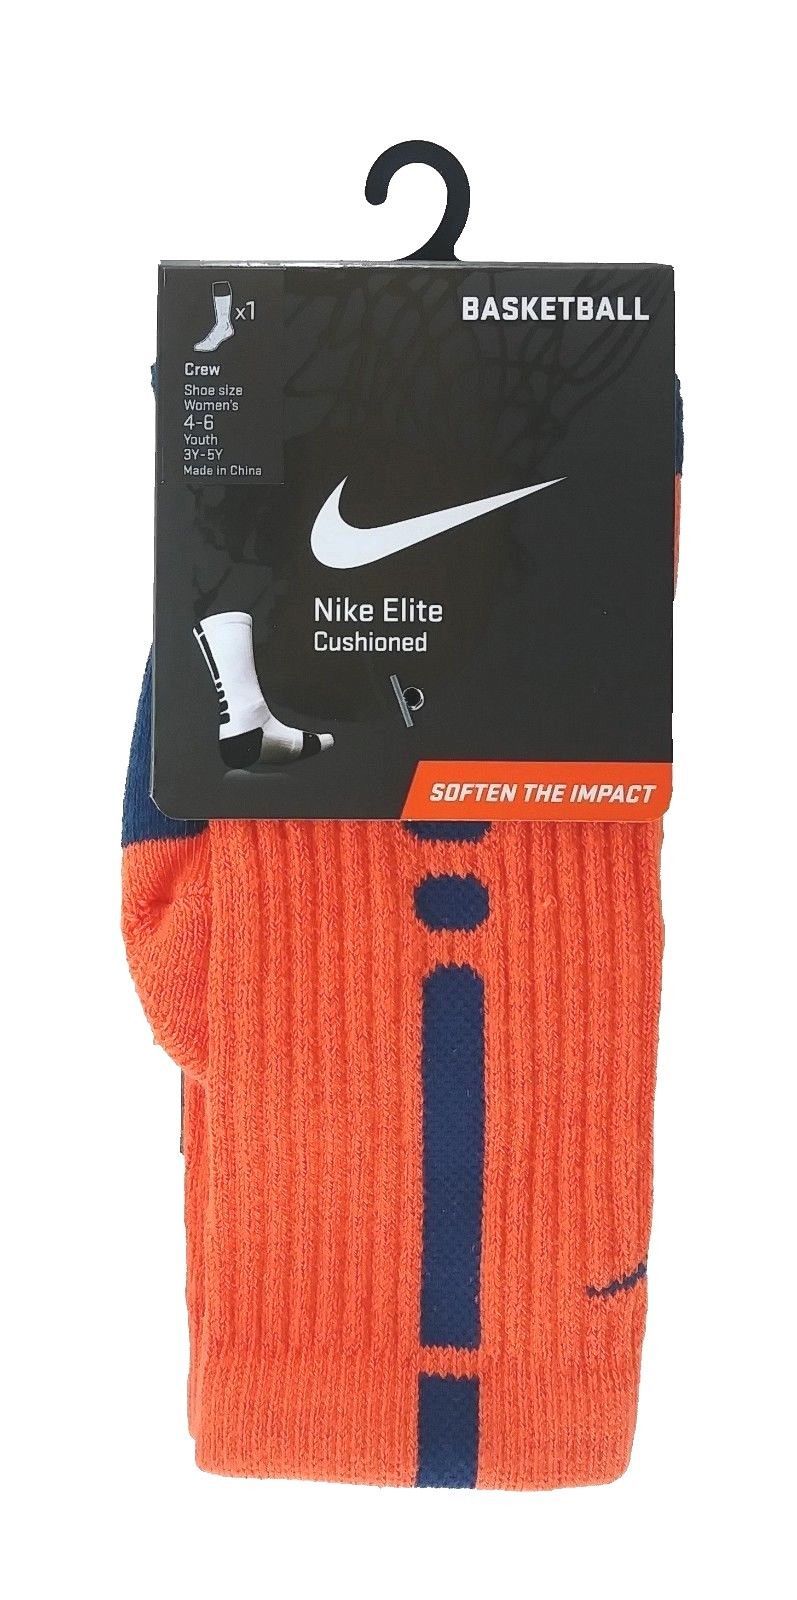 NIKE Elite Cushioned Basketball Crew Socks sz S Small (4-6) Turf Orange - $24.99